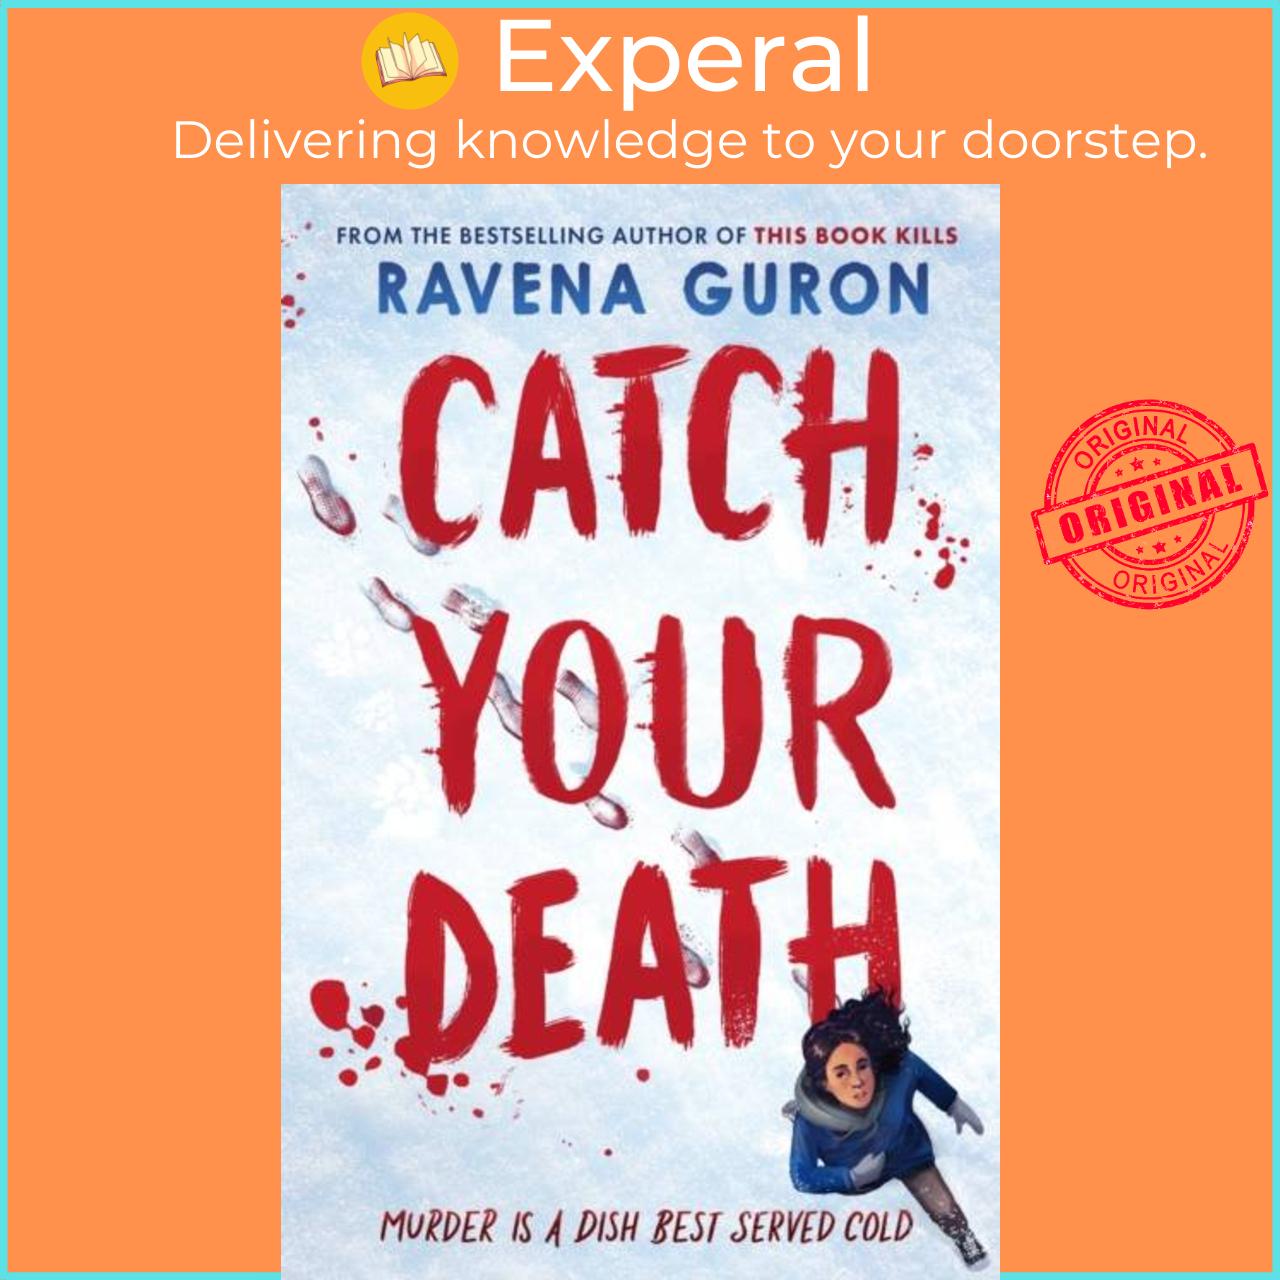 Sách - Catch Your Death by Ravena Guron (UK edition, paperback)